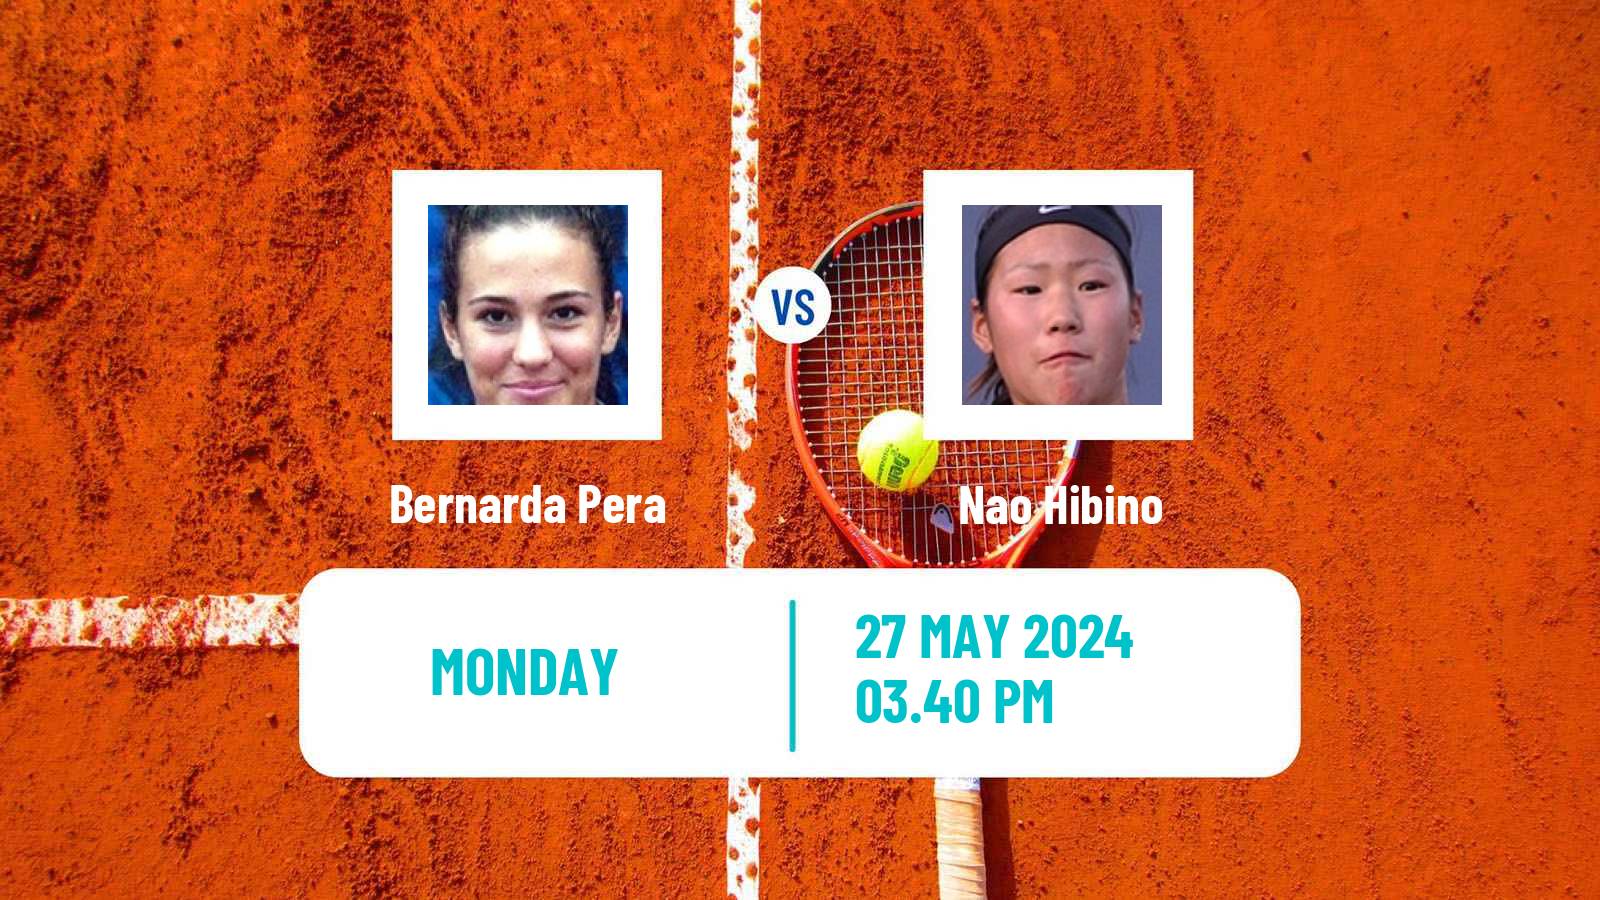 Tennis WTA Roland Garros Bernarda Pera - Nao Hibino